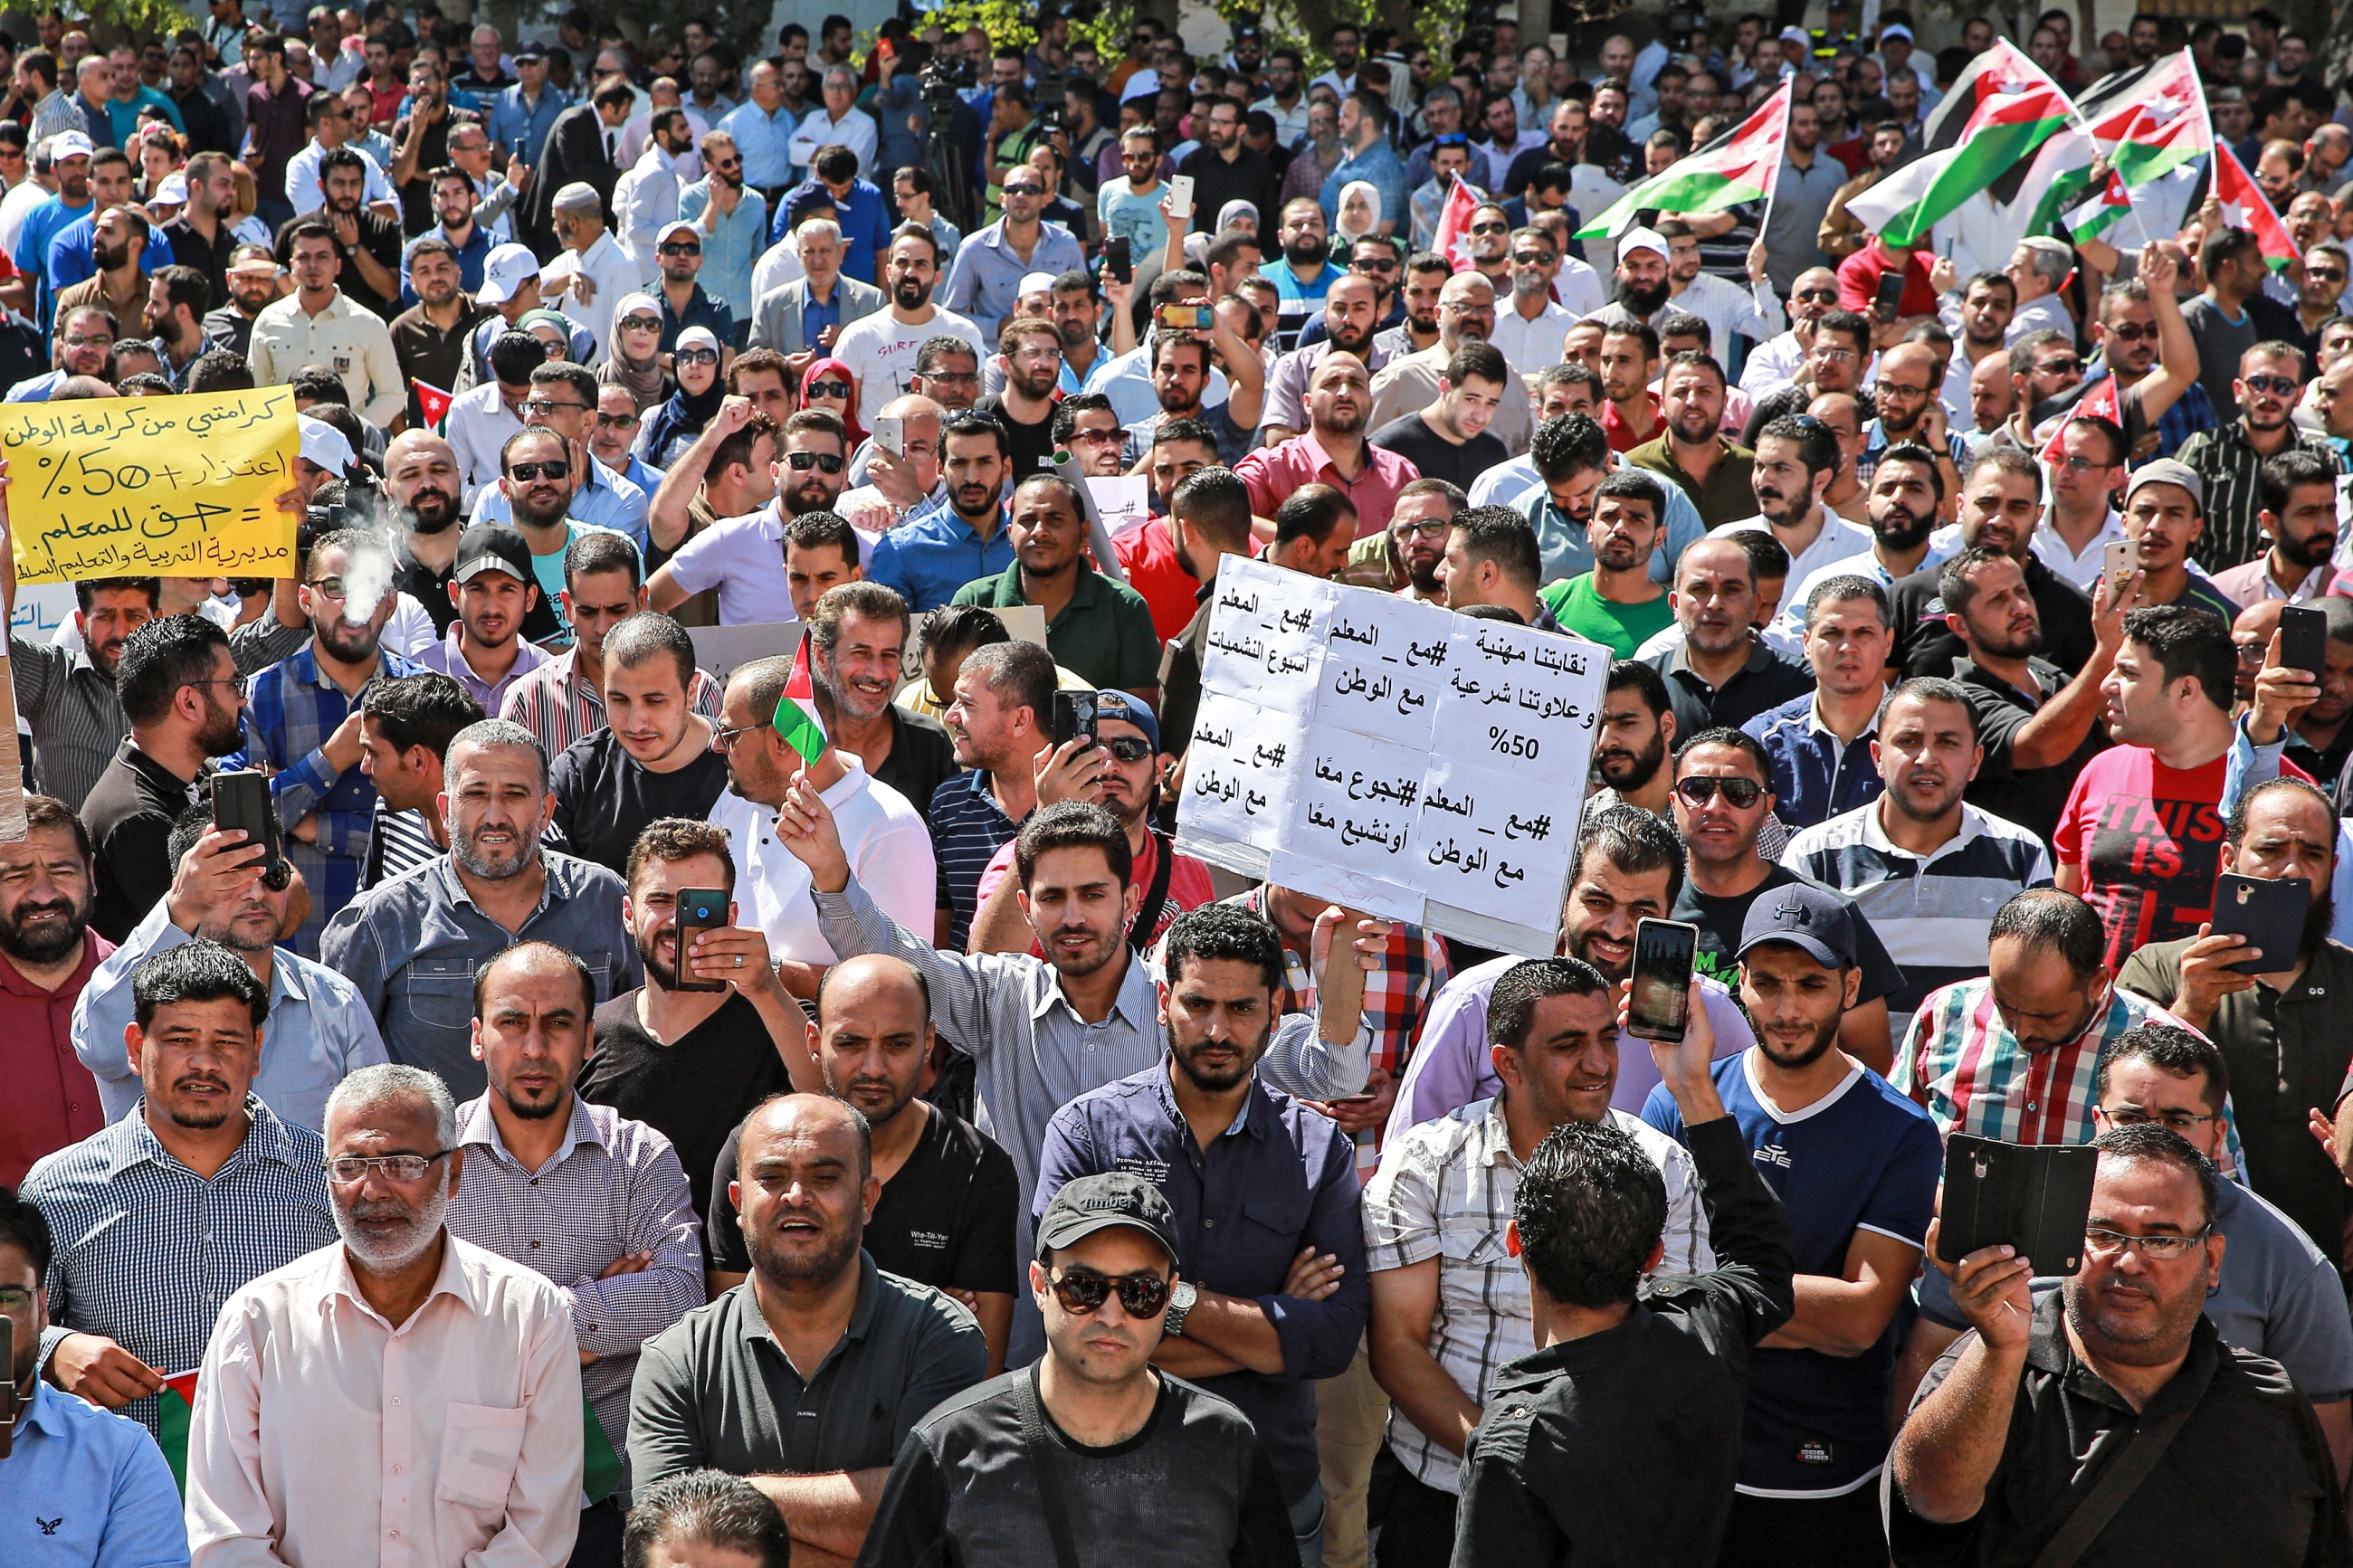 Public school teachers gather for a demonstration demanding pay raises, at the Professional Associations Complex in Jordan's capital Amman on October 3, 2019 (AFP)